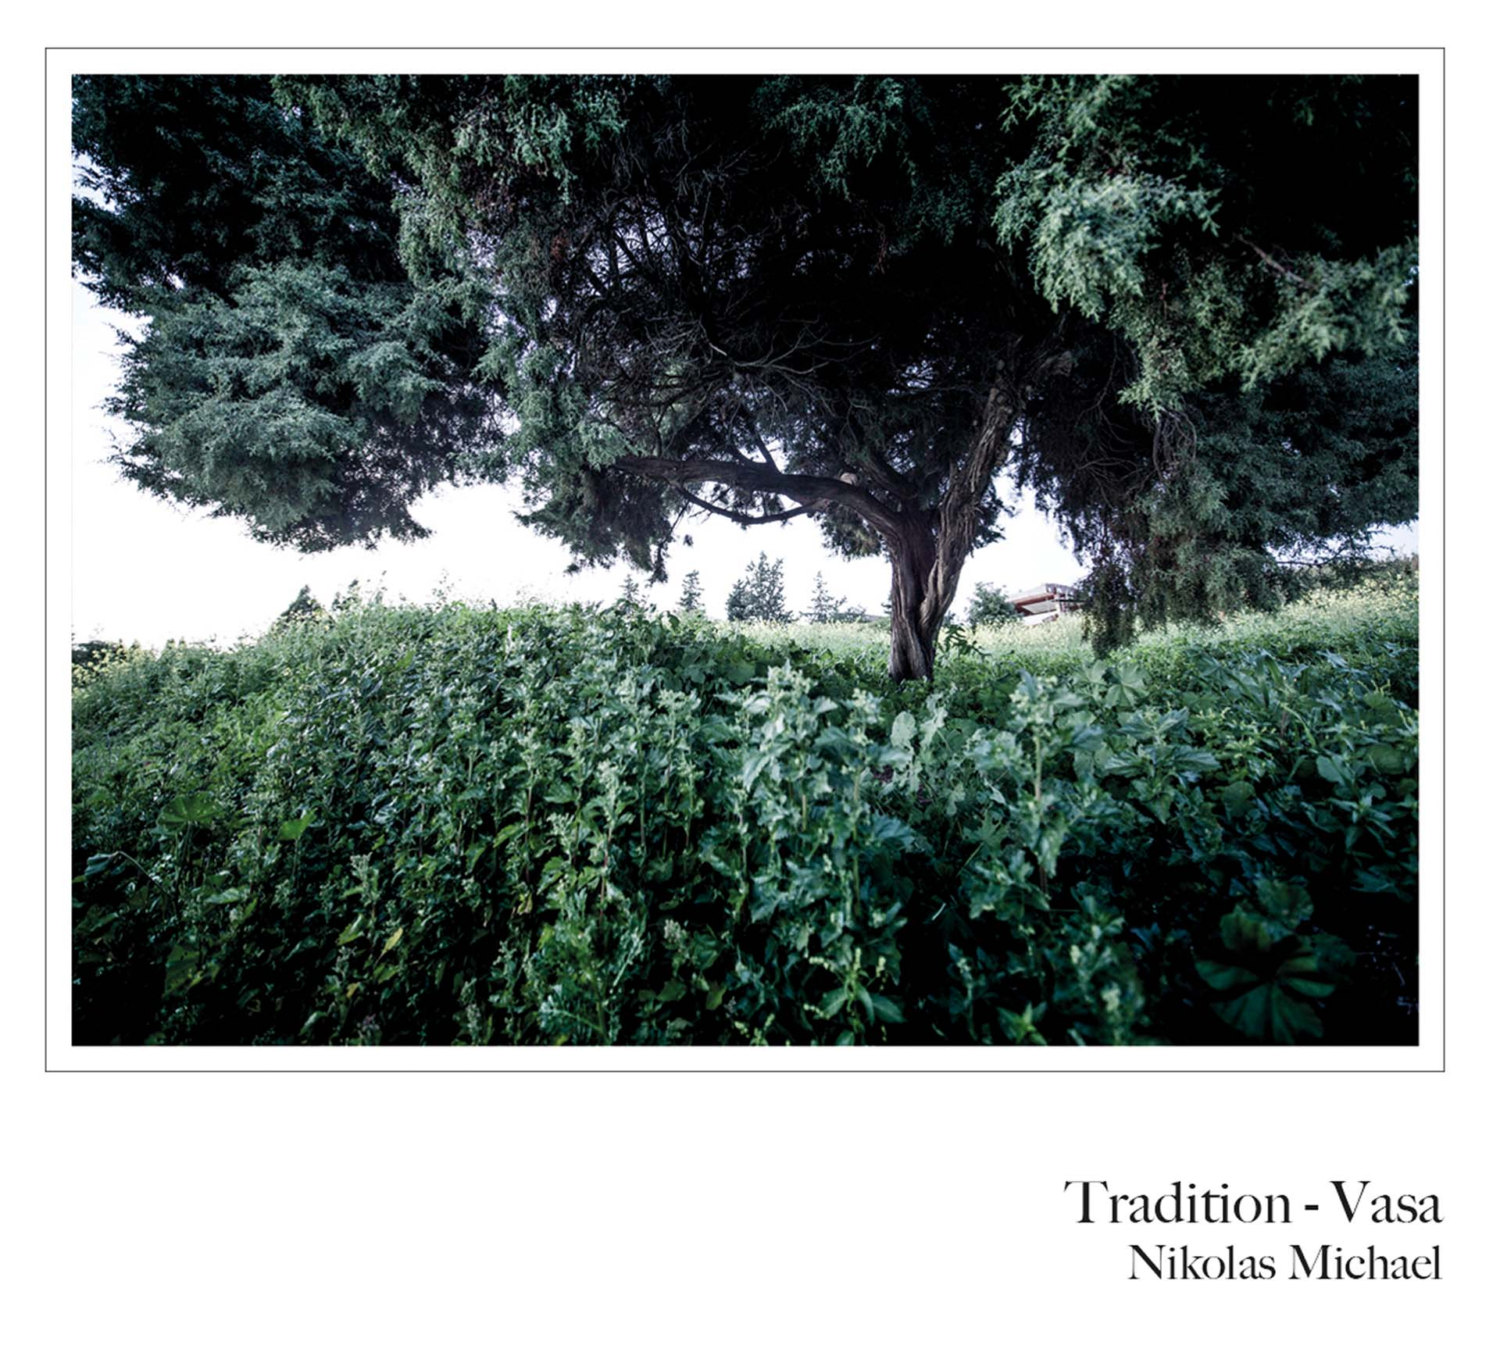 Tradition - Vasa by Nikolas Michael (nature, tree, landscape, fine art, color photography, Cyprus)